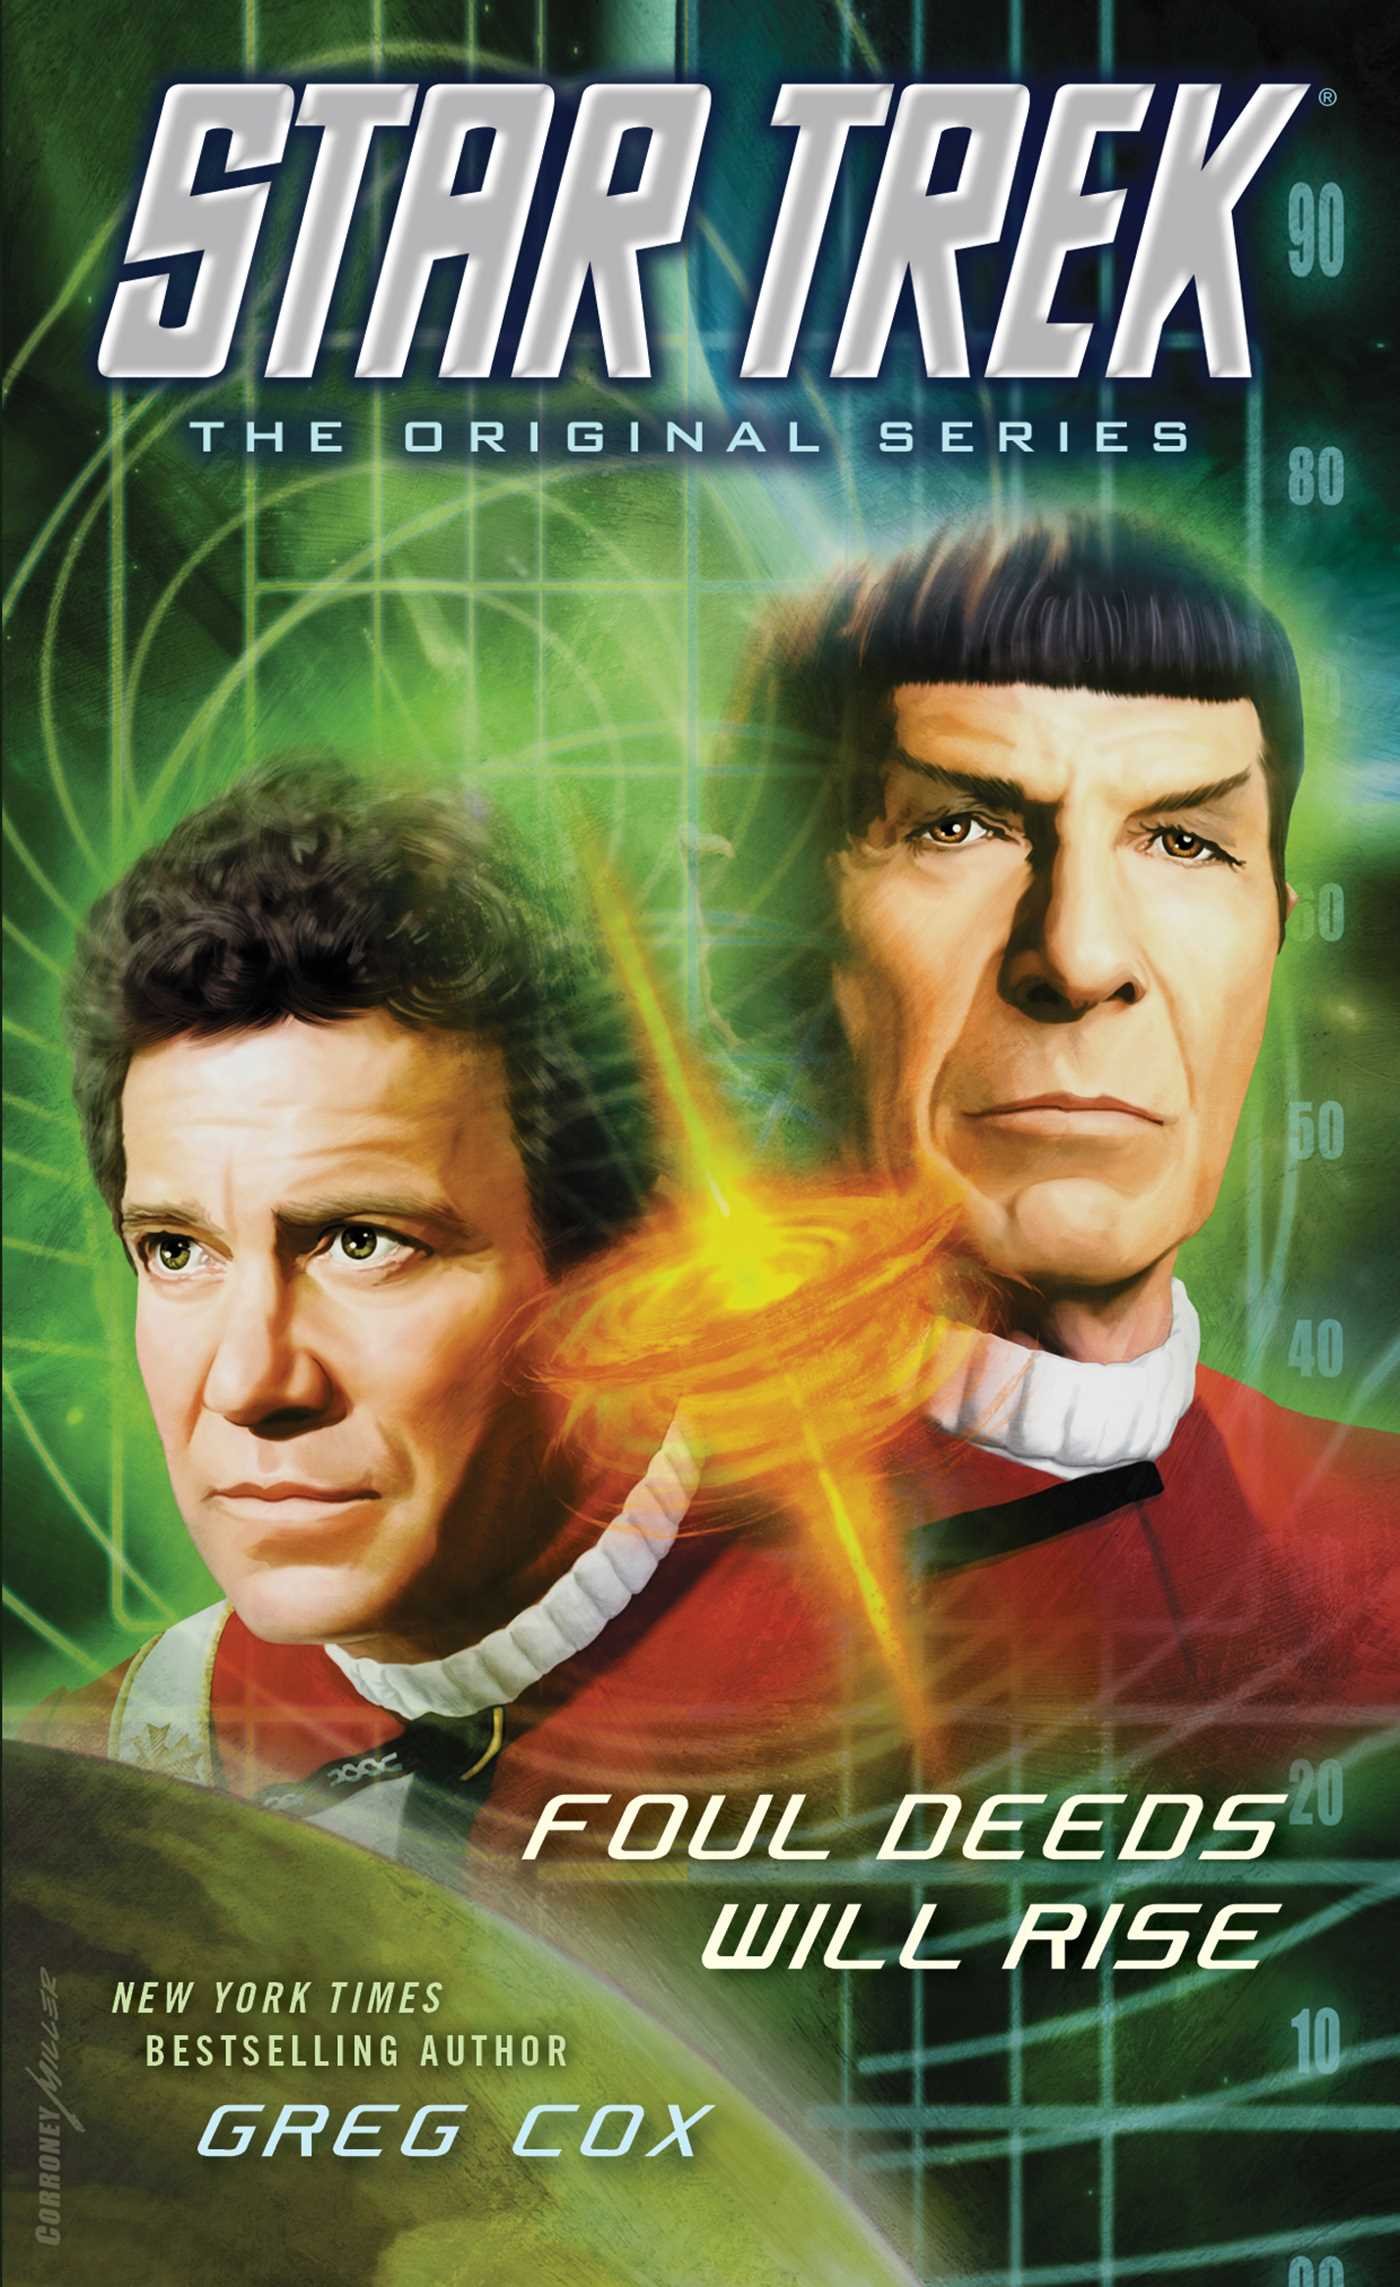 “Star Trek: The Original Series: Foul Deeds Will Rise” Review by Motionpicturescomics.com